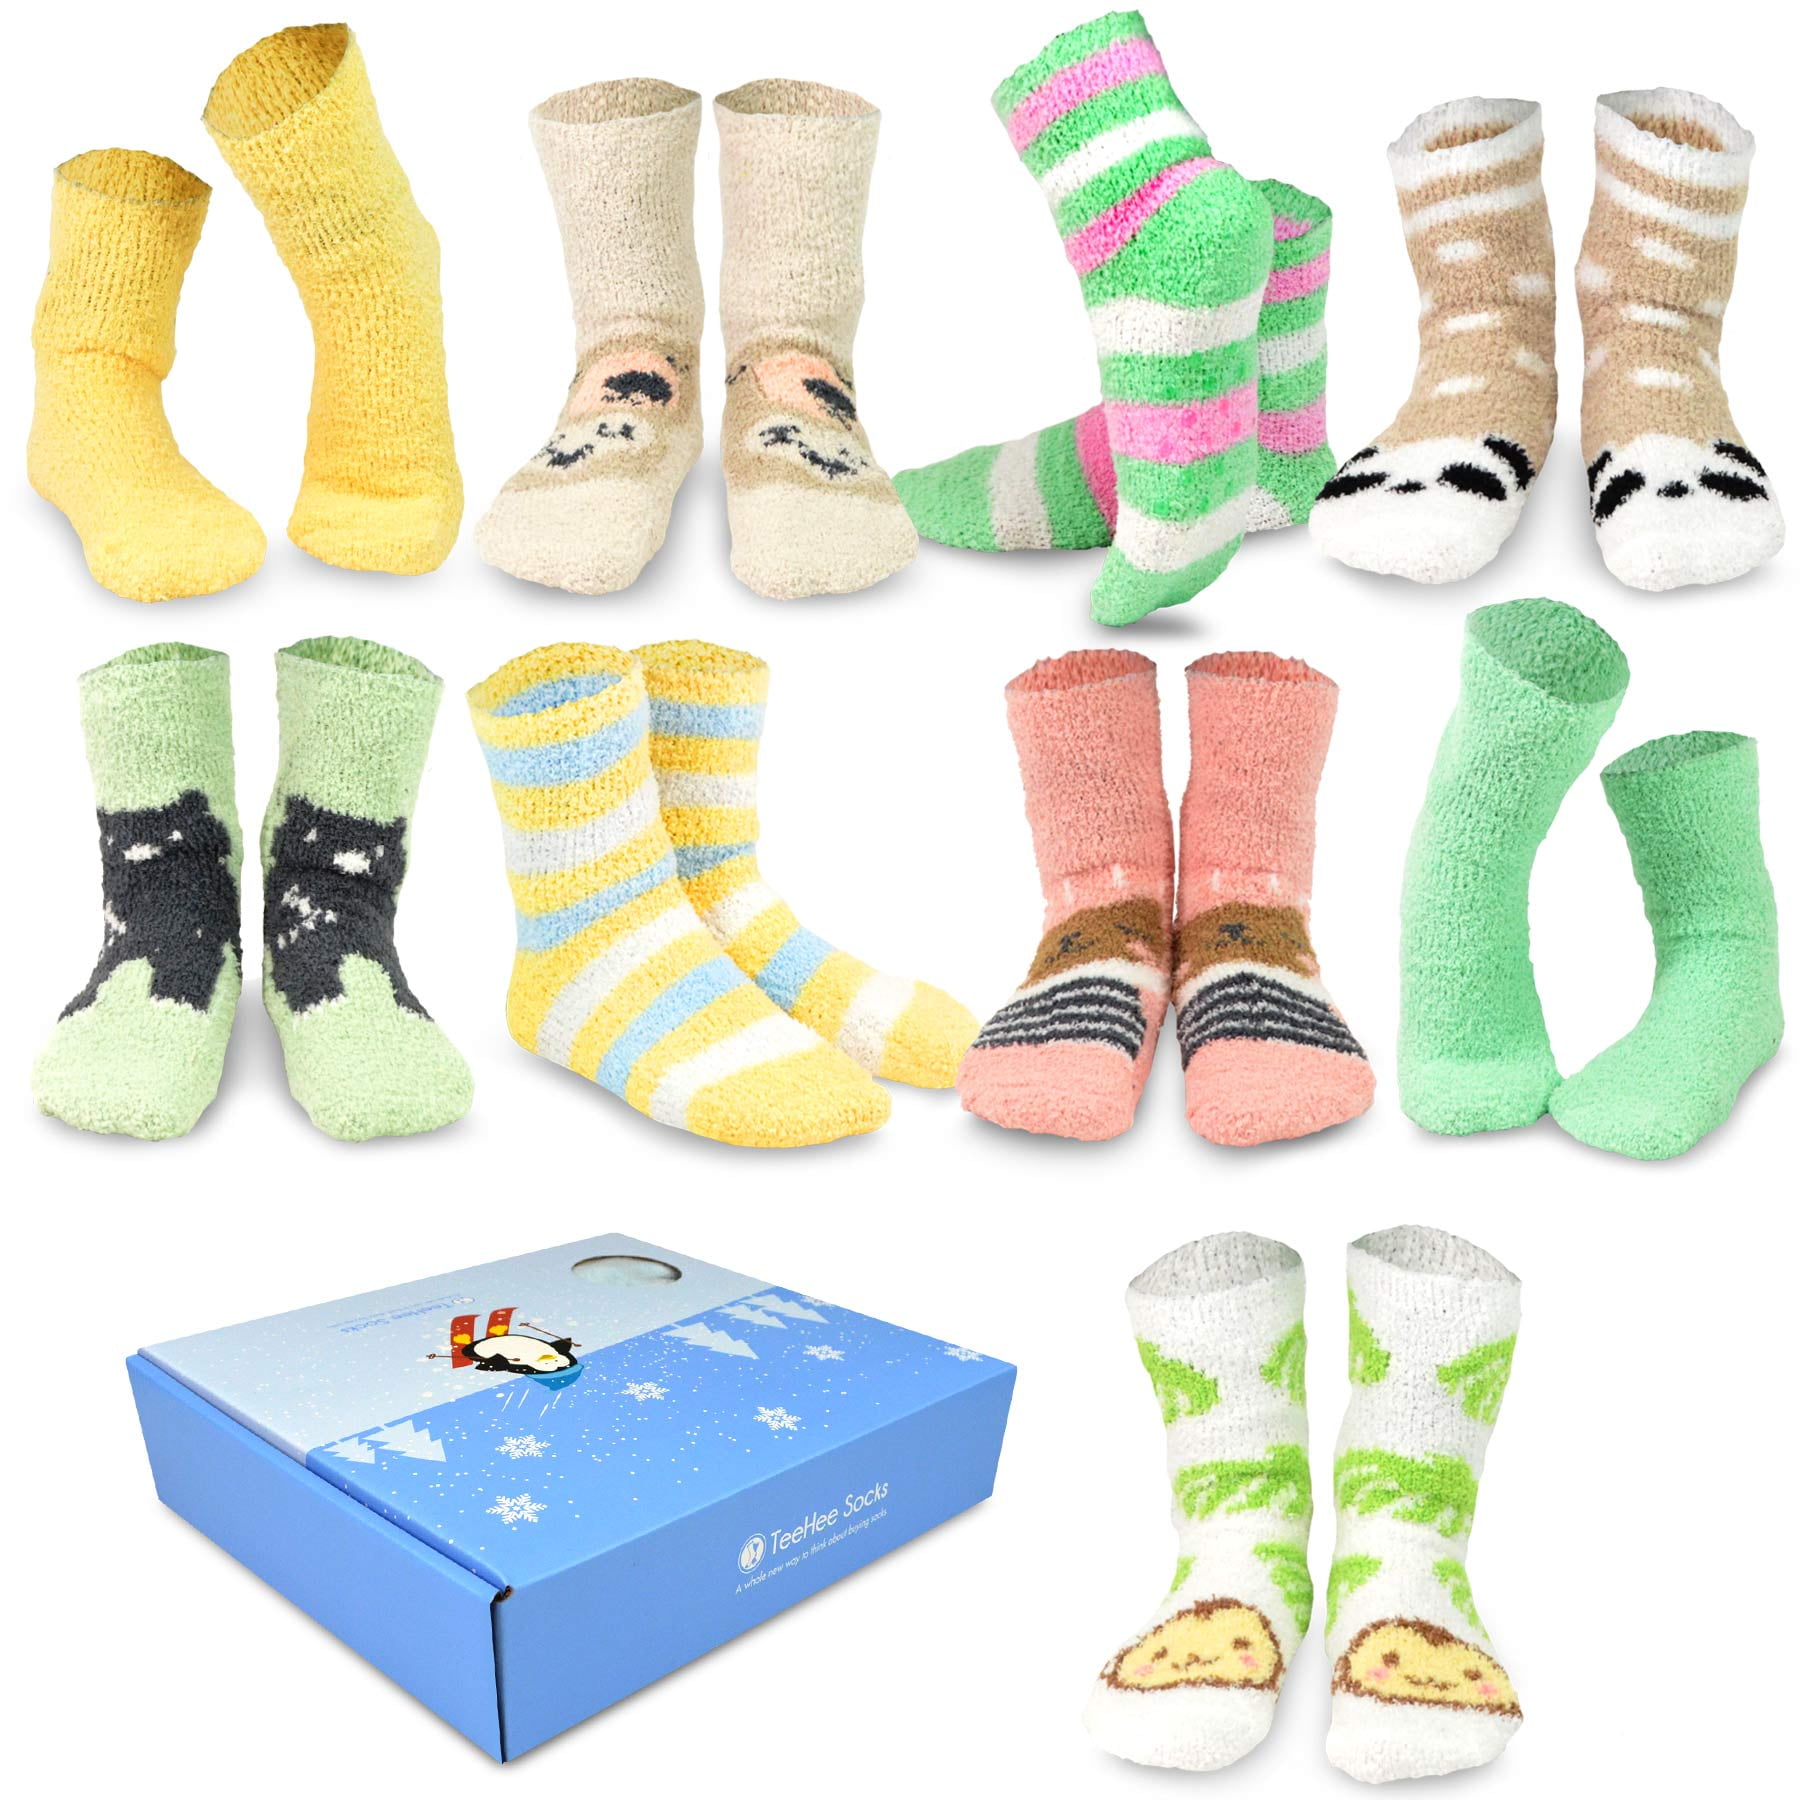 TeeHee Winter Cozy Fuzzy Fluffy Fun Slipper Socks 9-Pack with Gift Box ...